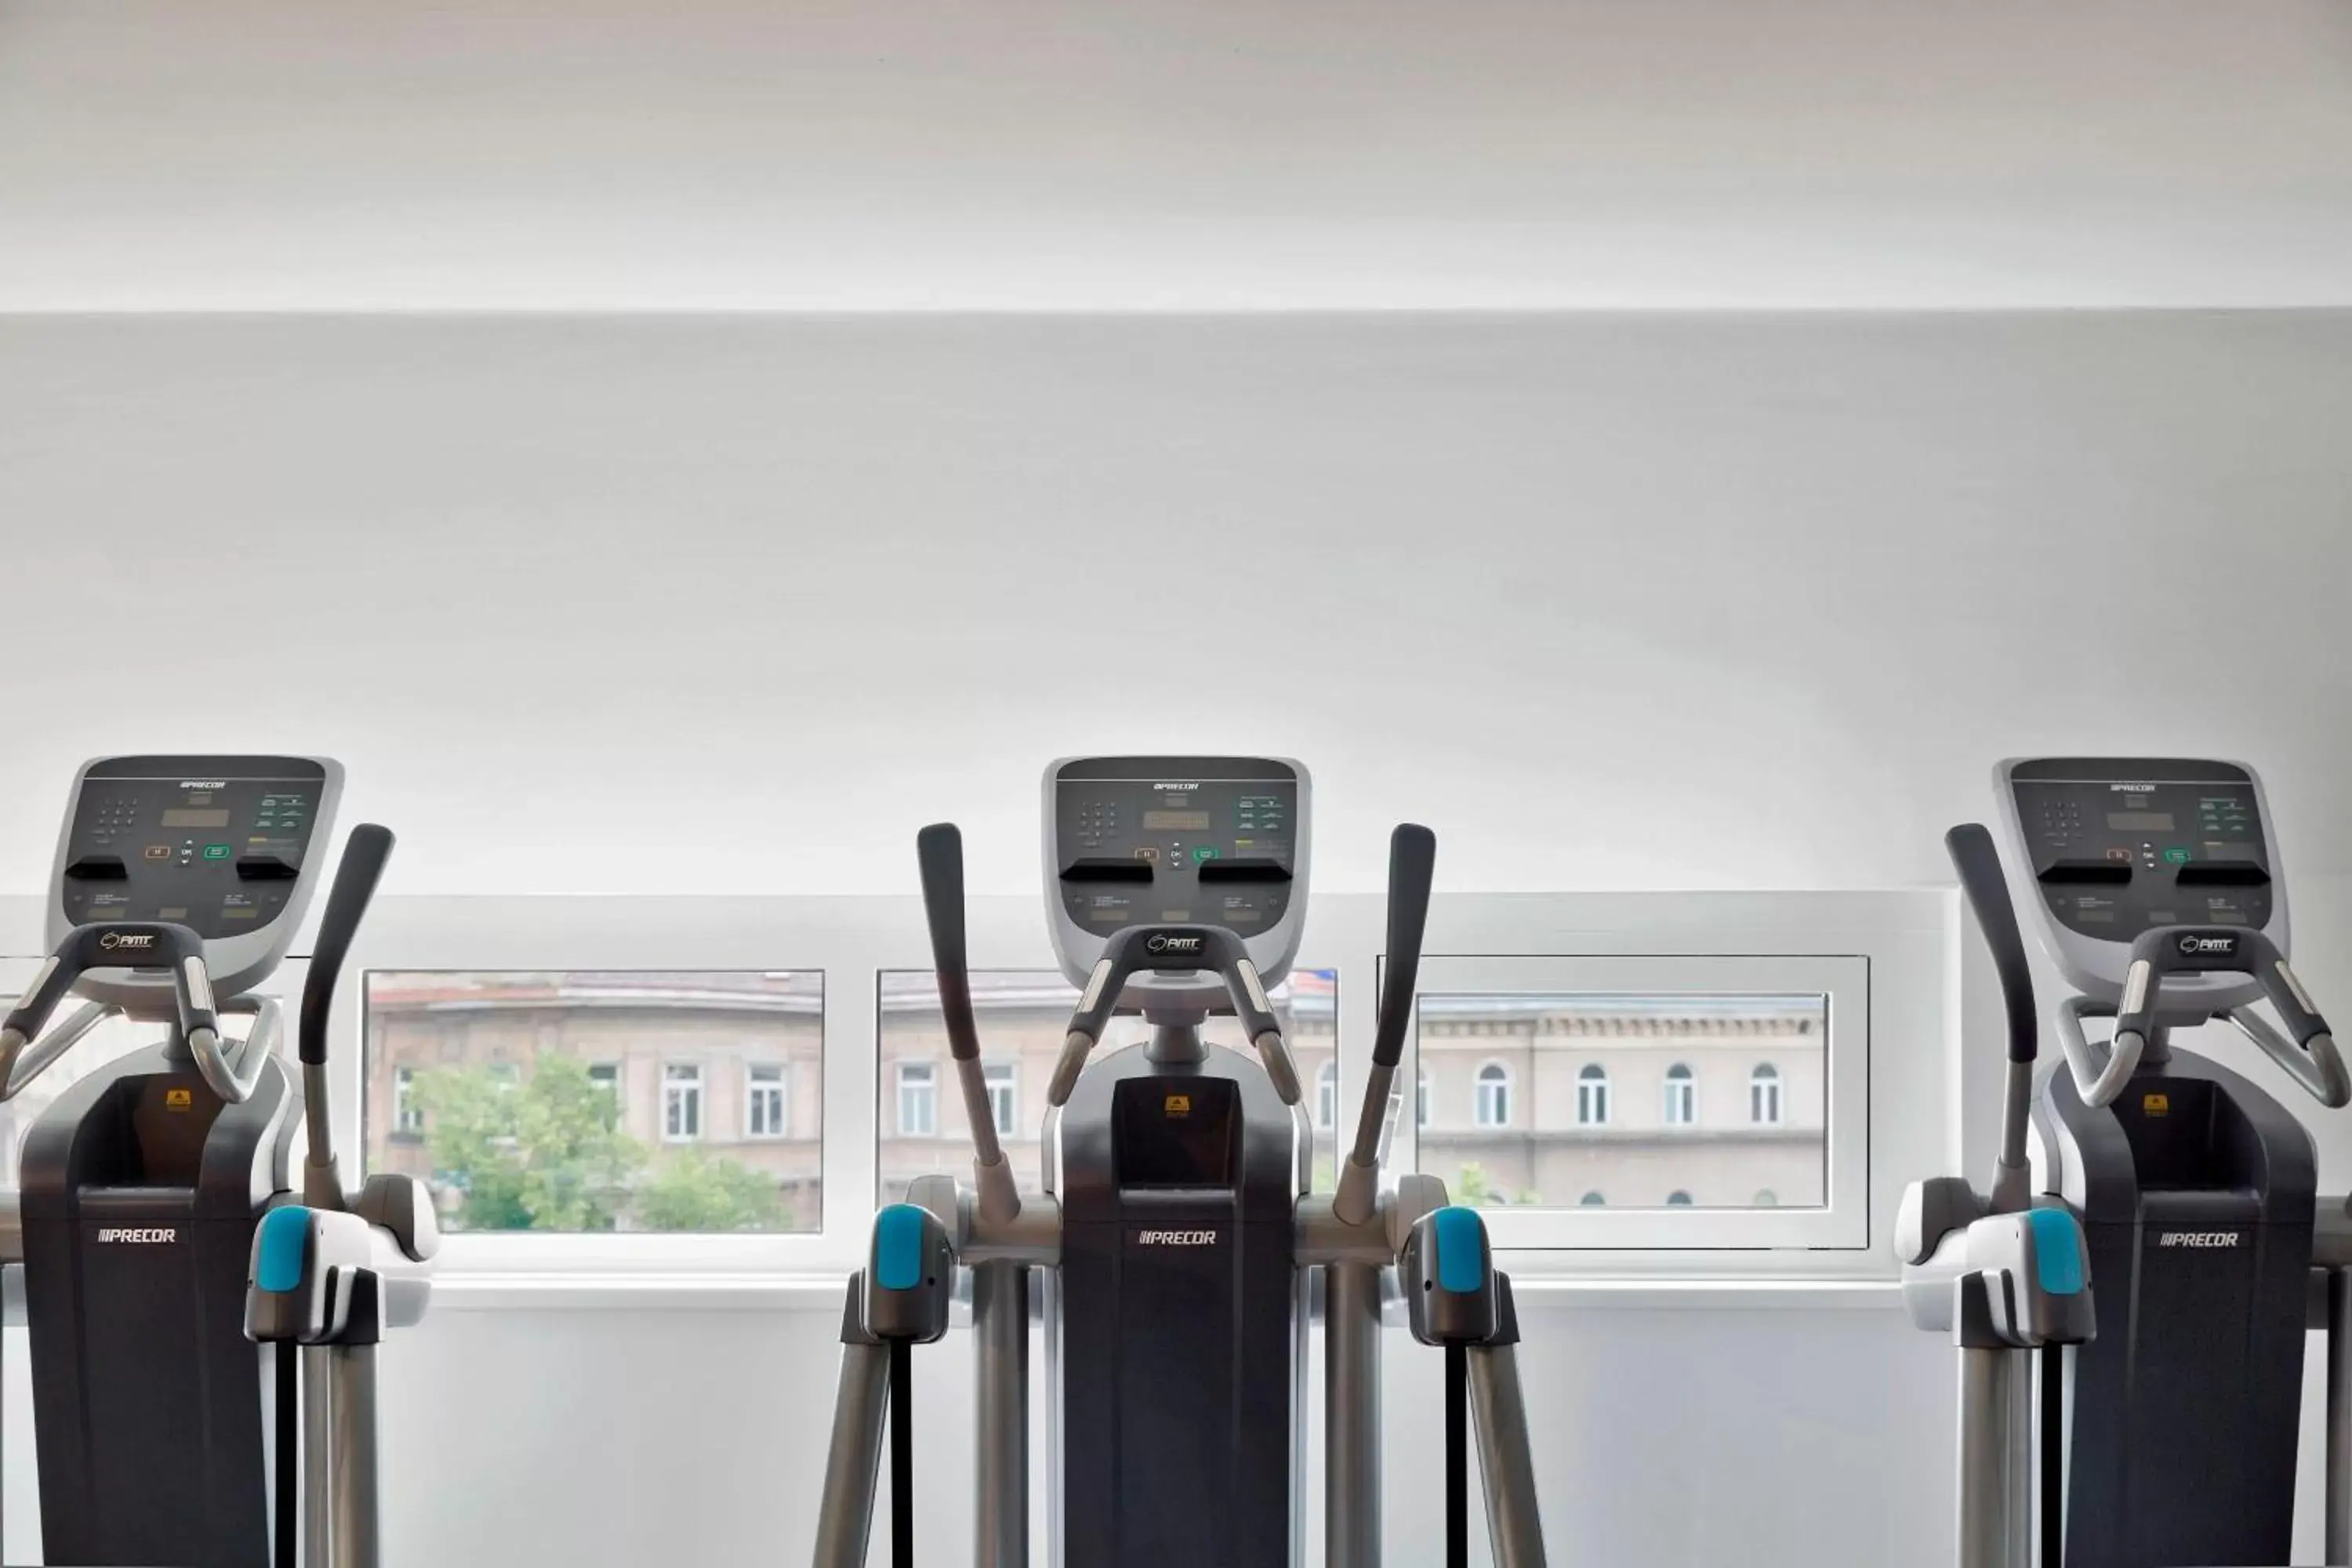 Fitness centre/facilities, Fitness Center/Facilities in Renaissance Wien Hotel